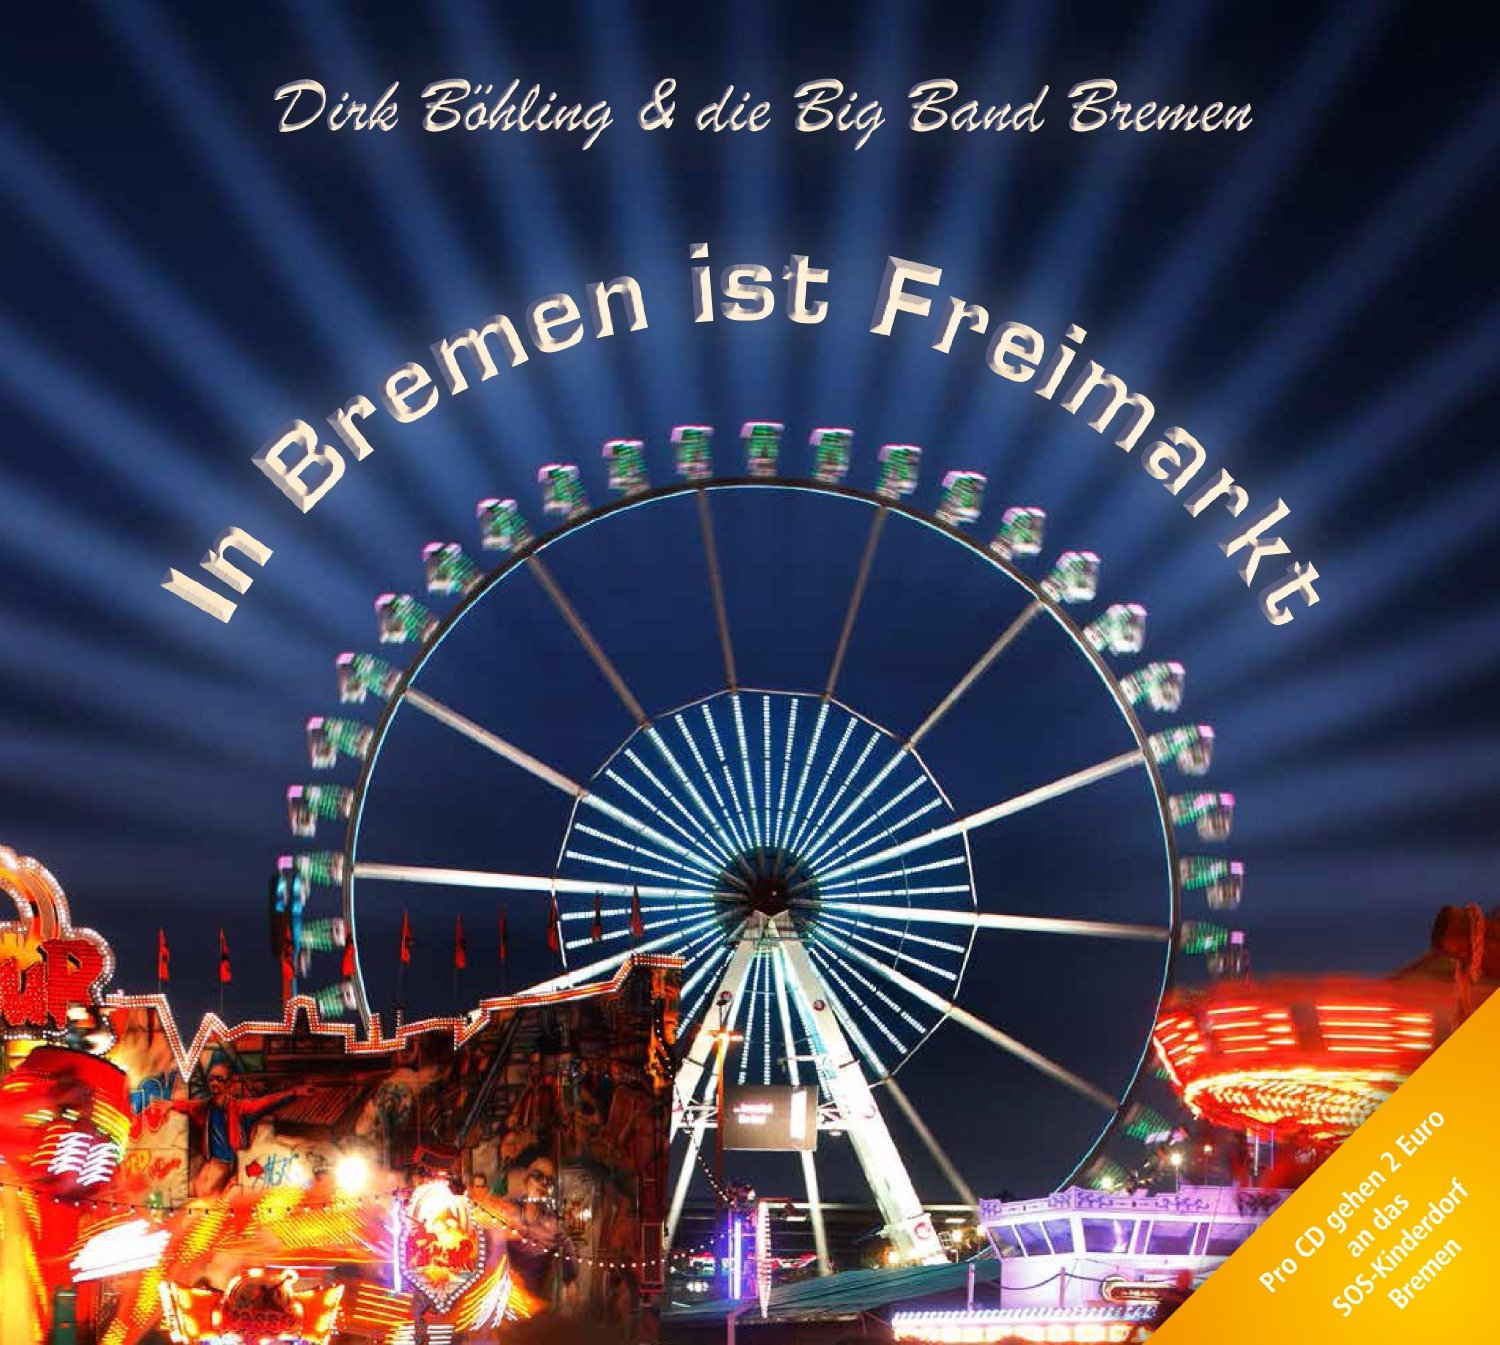 Cover "In Bremen ist Freimarkt"